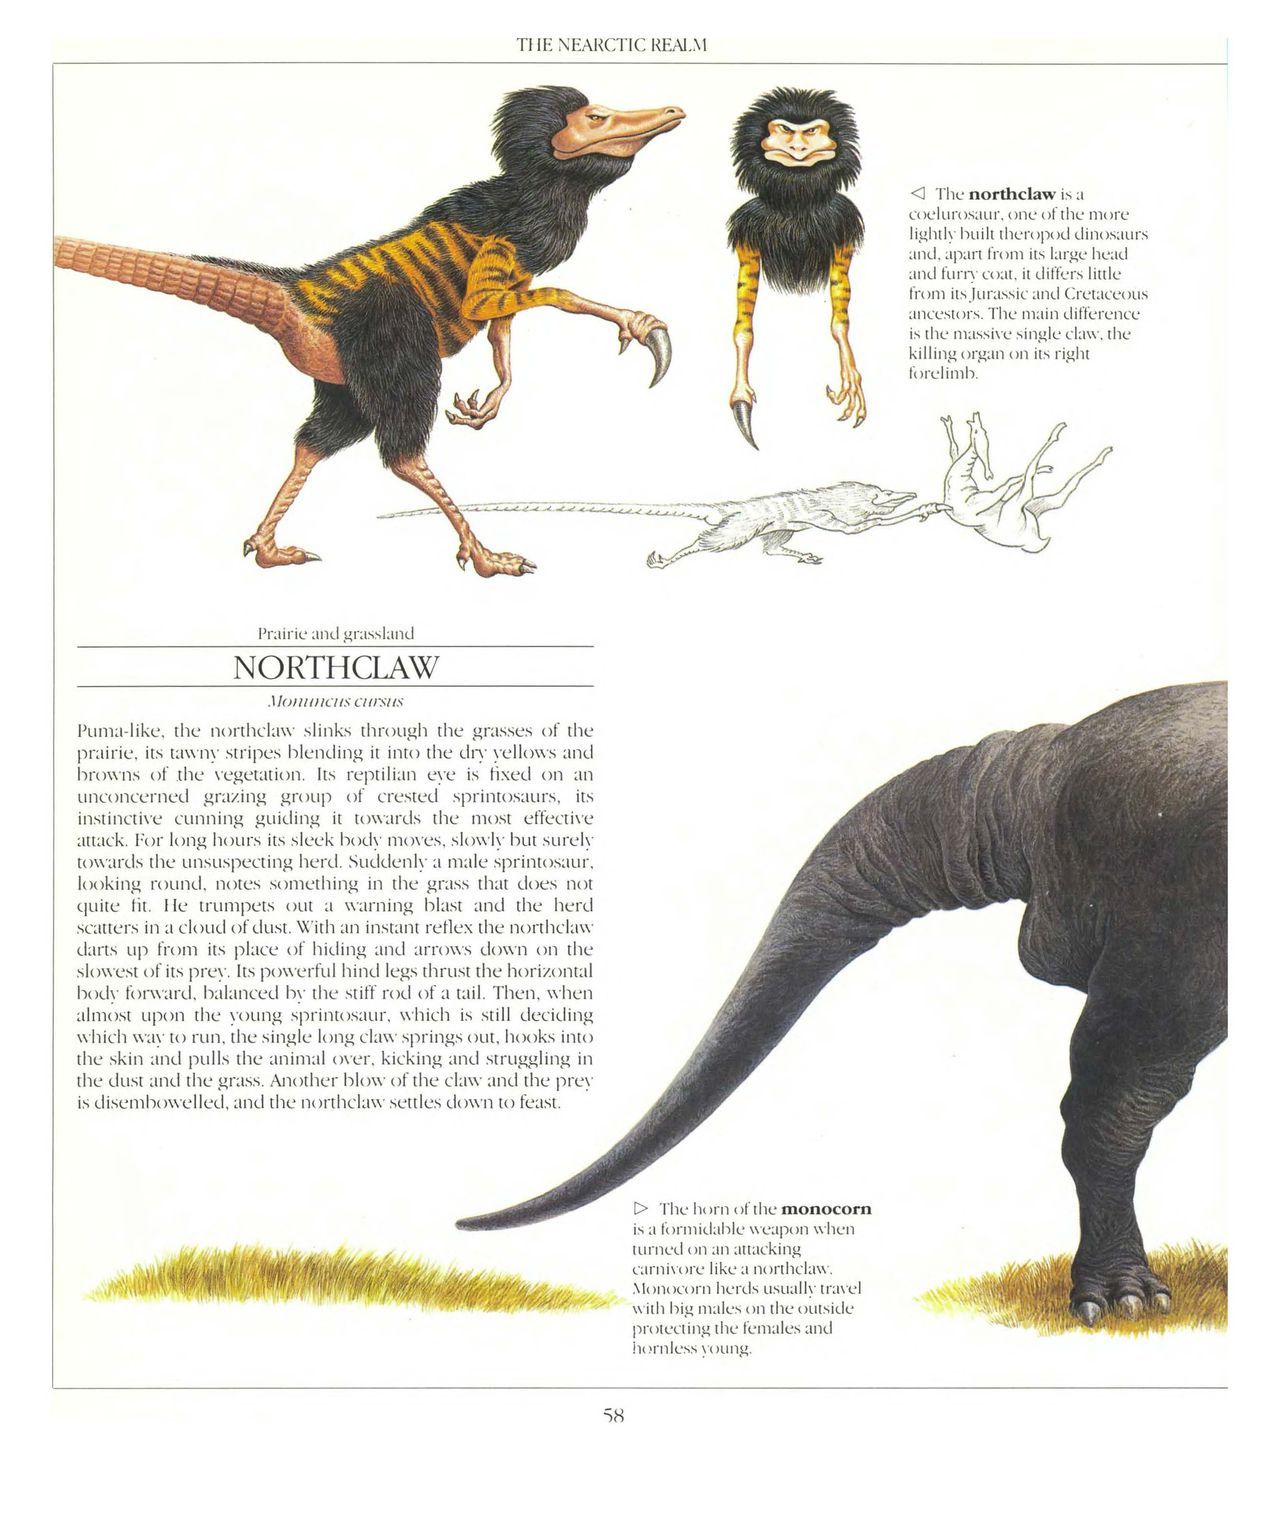 [Dougal Dixon] The New Dinosaurs: An Alternative Evolution 59